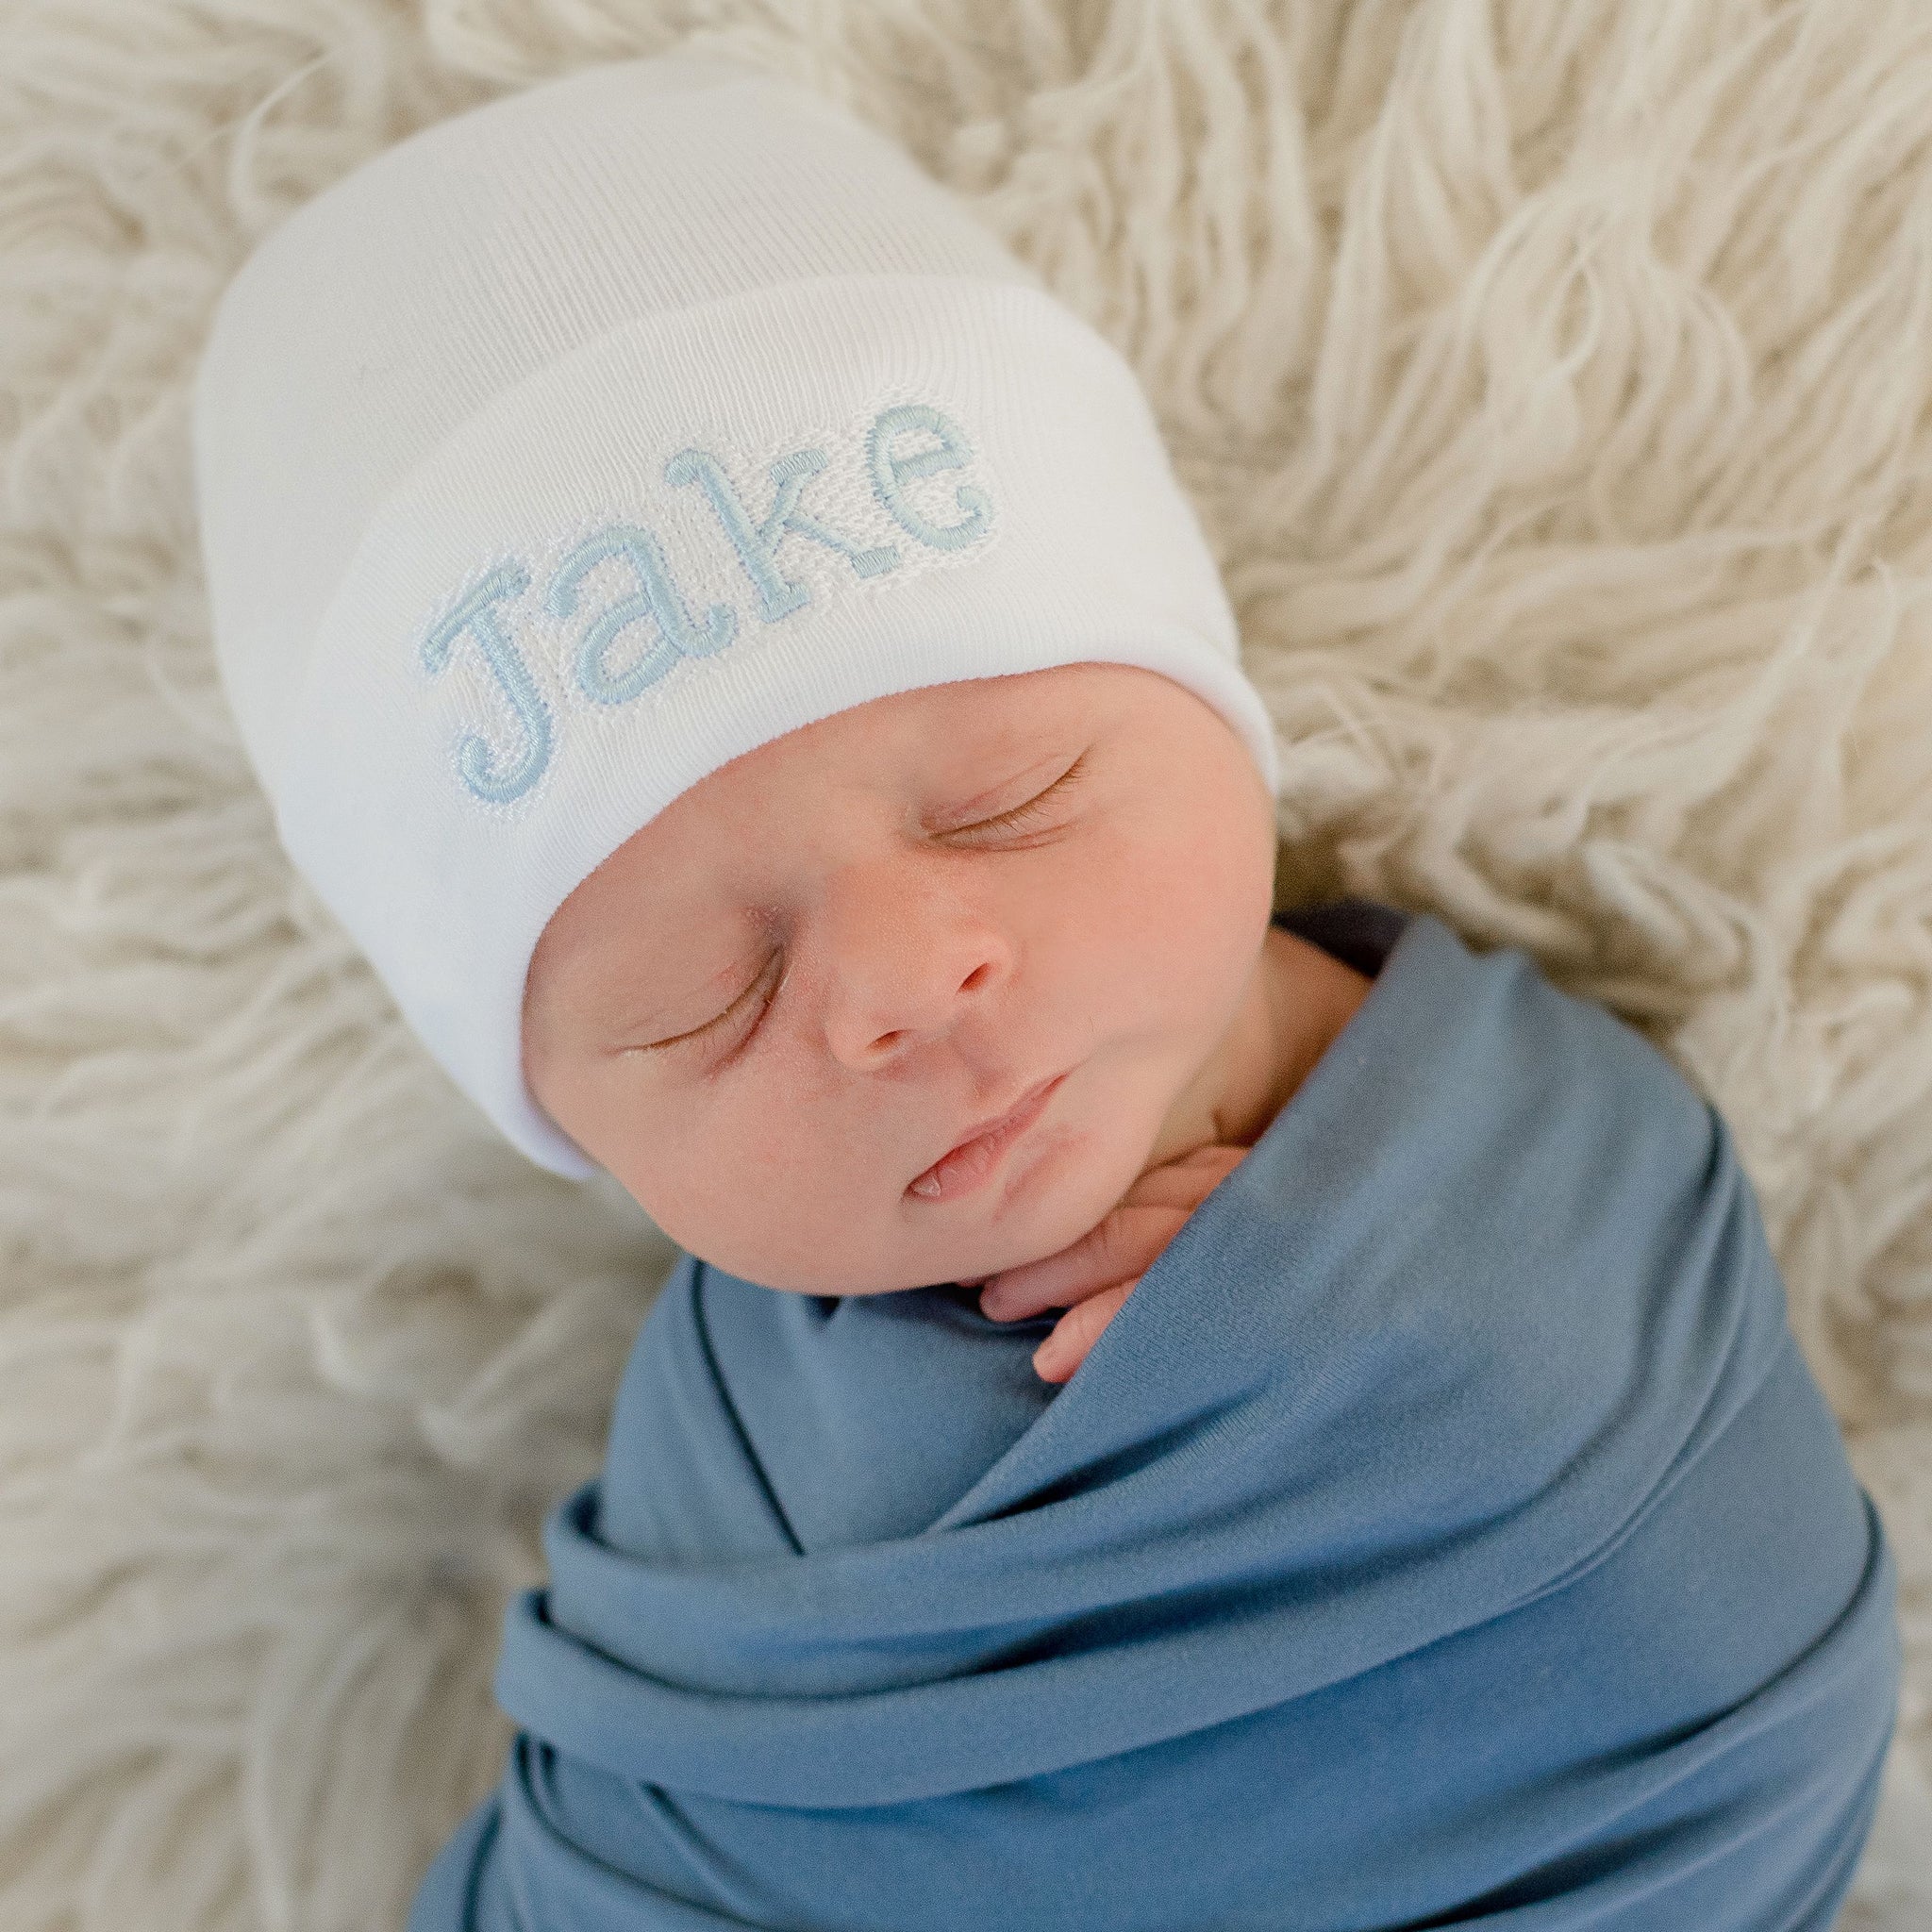 ilybean Personalized Shadow Stitch White, Blue or Pink Hospital Newborn Hospital Hat Nursery Beanie